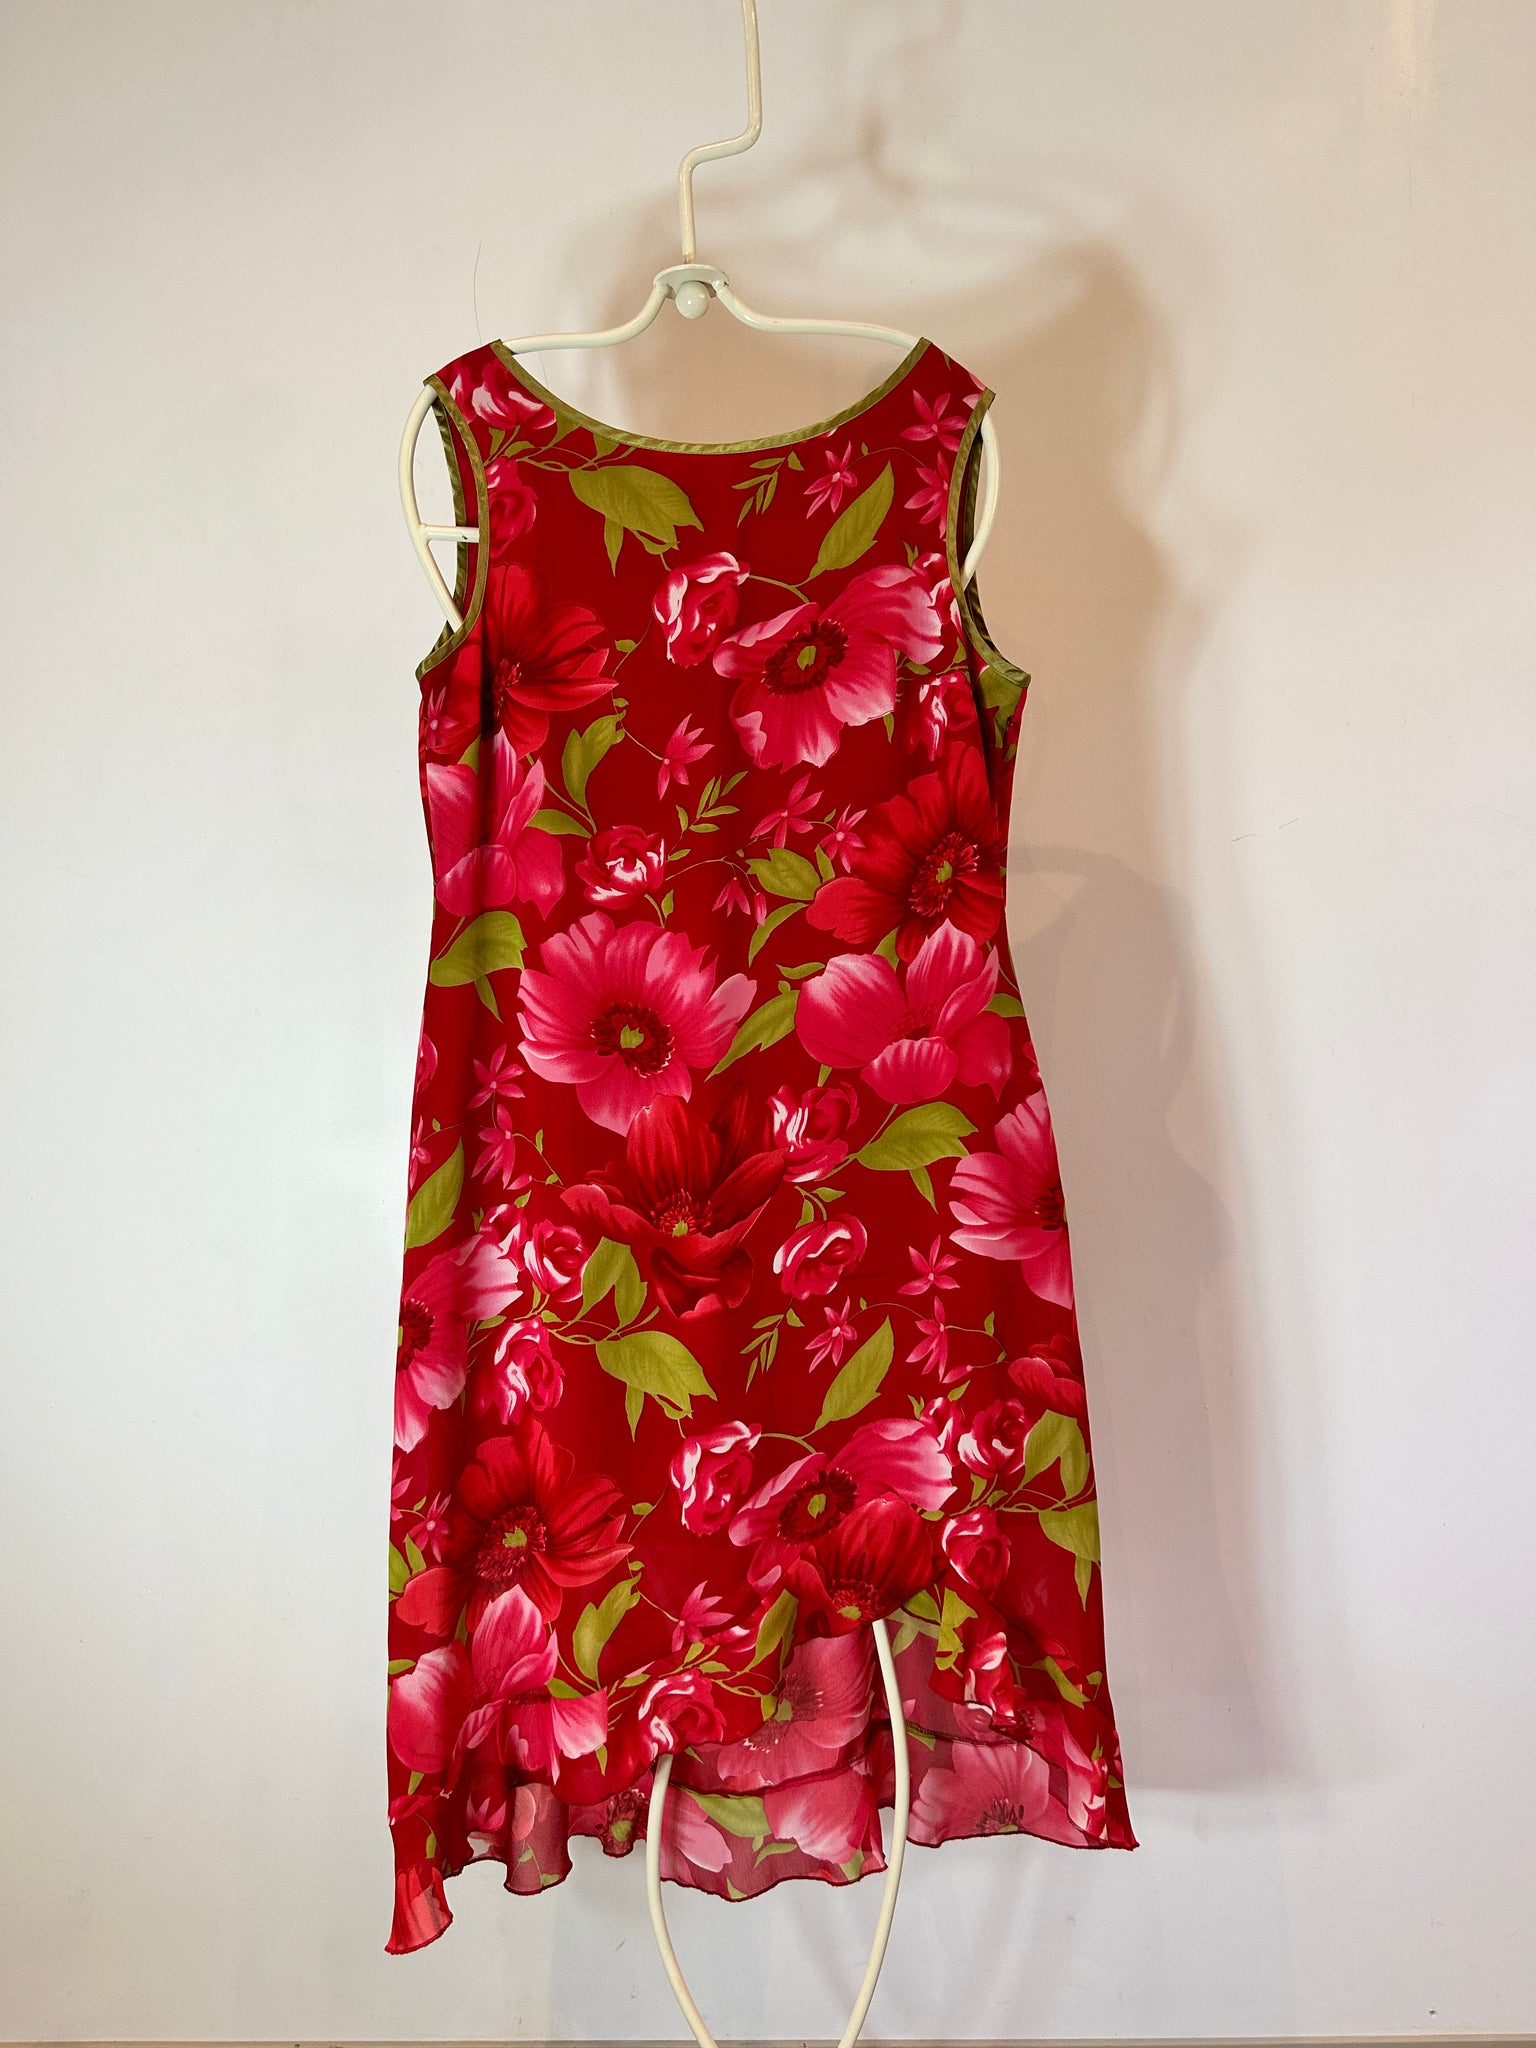 Thrifted vintage & pre-loved dresses part 1